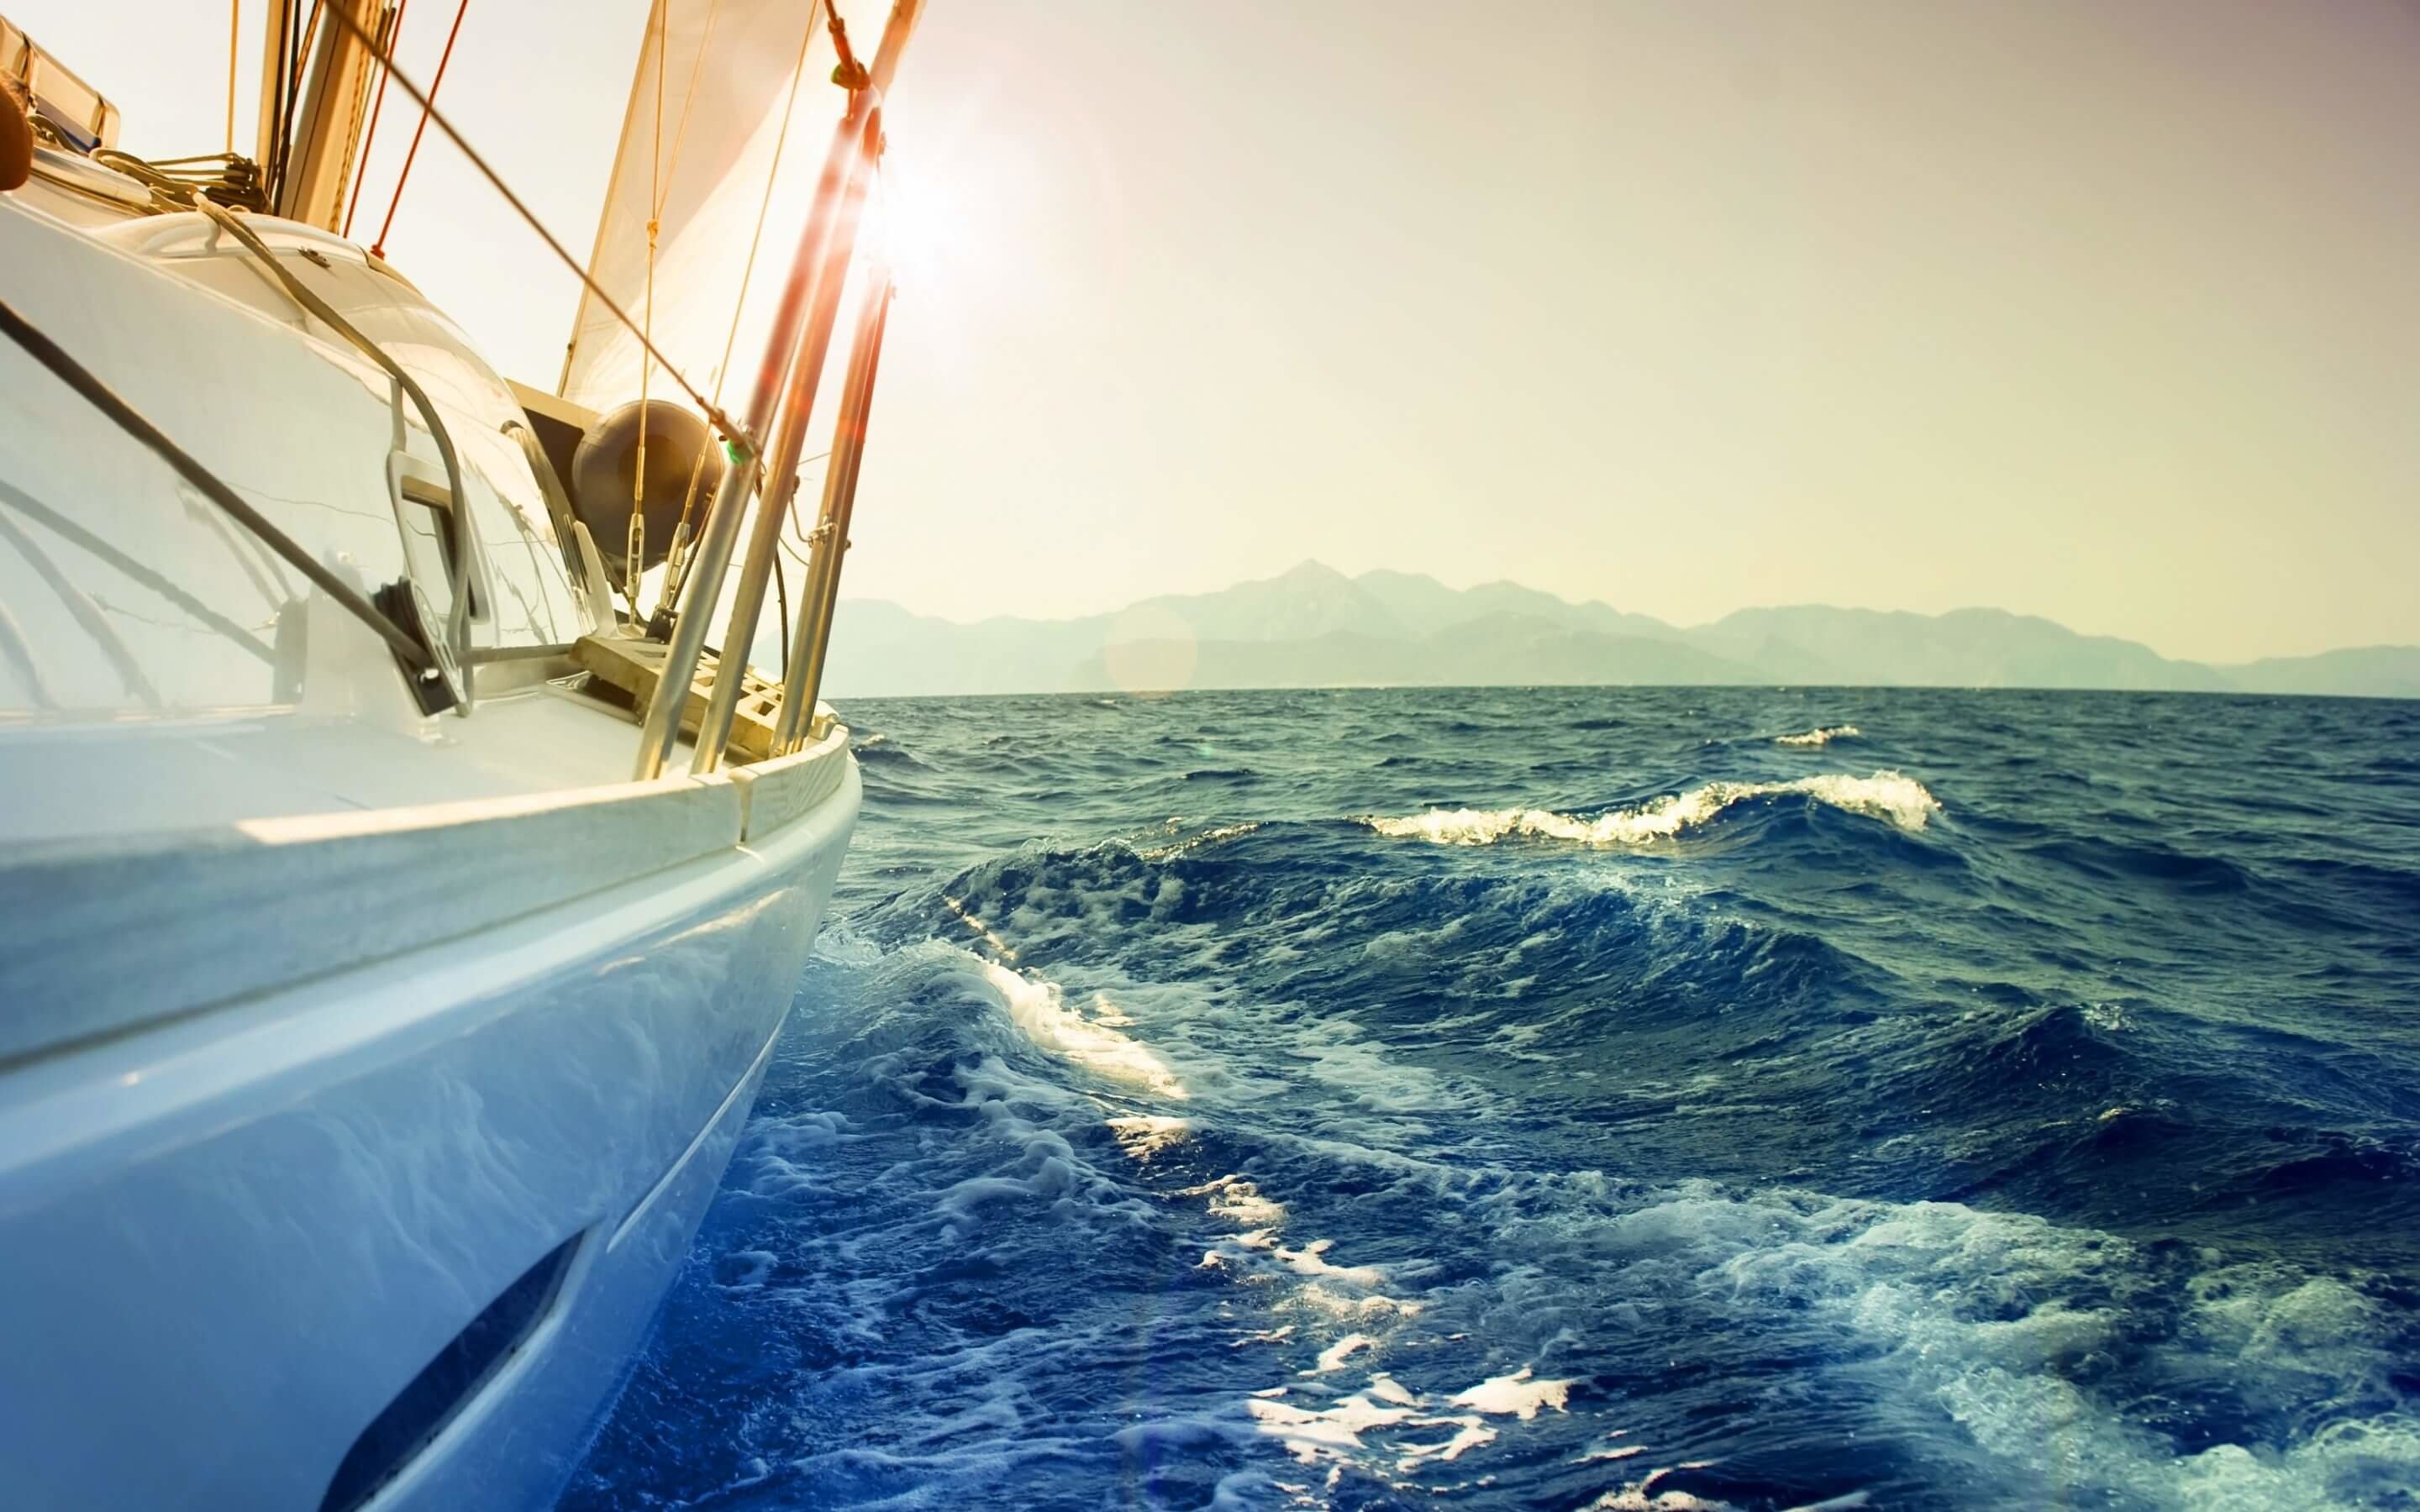 Yacht Sailing Downwind at Sunset Wallpaper for Desktop 2880x1800